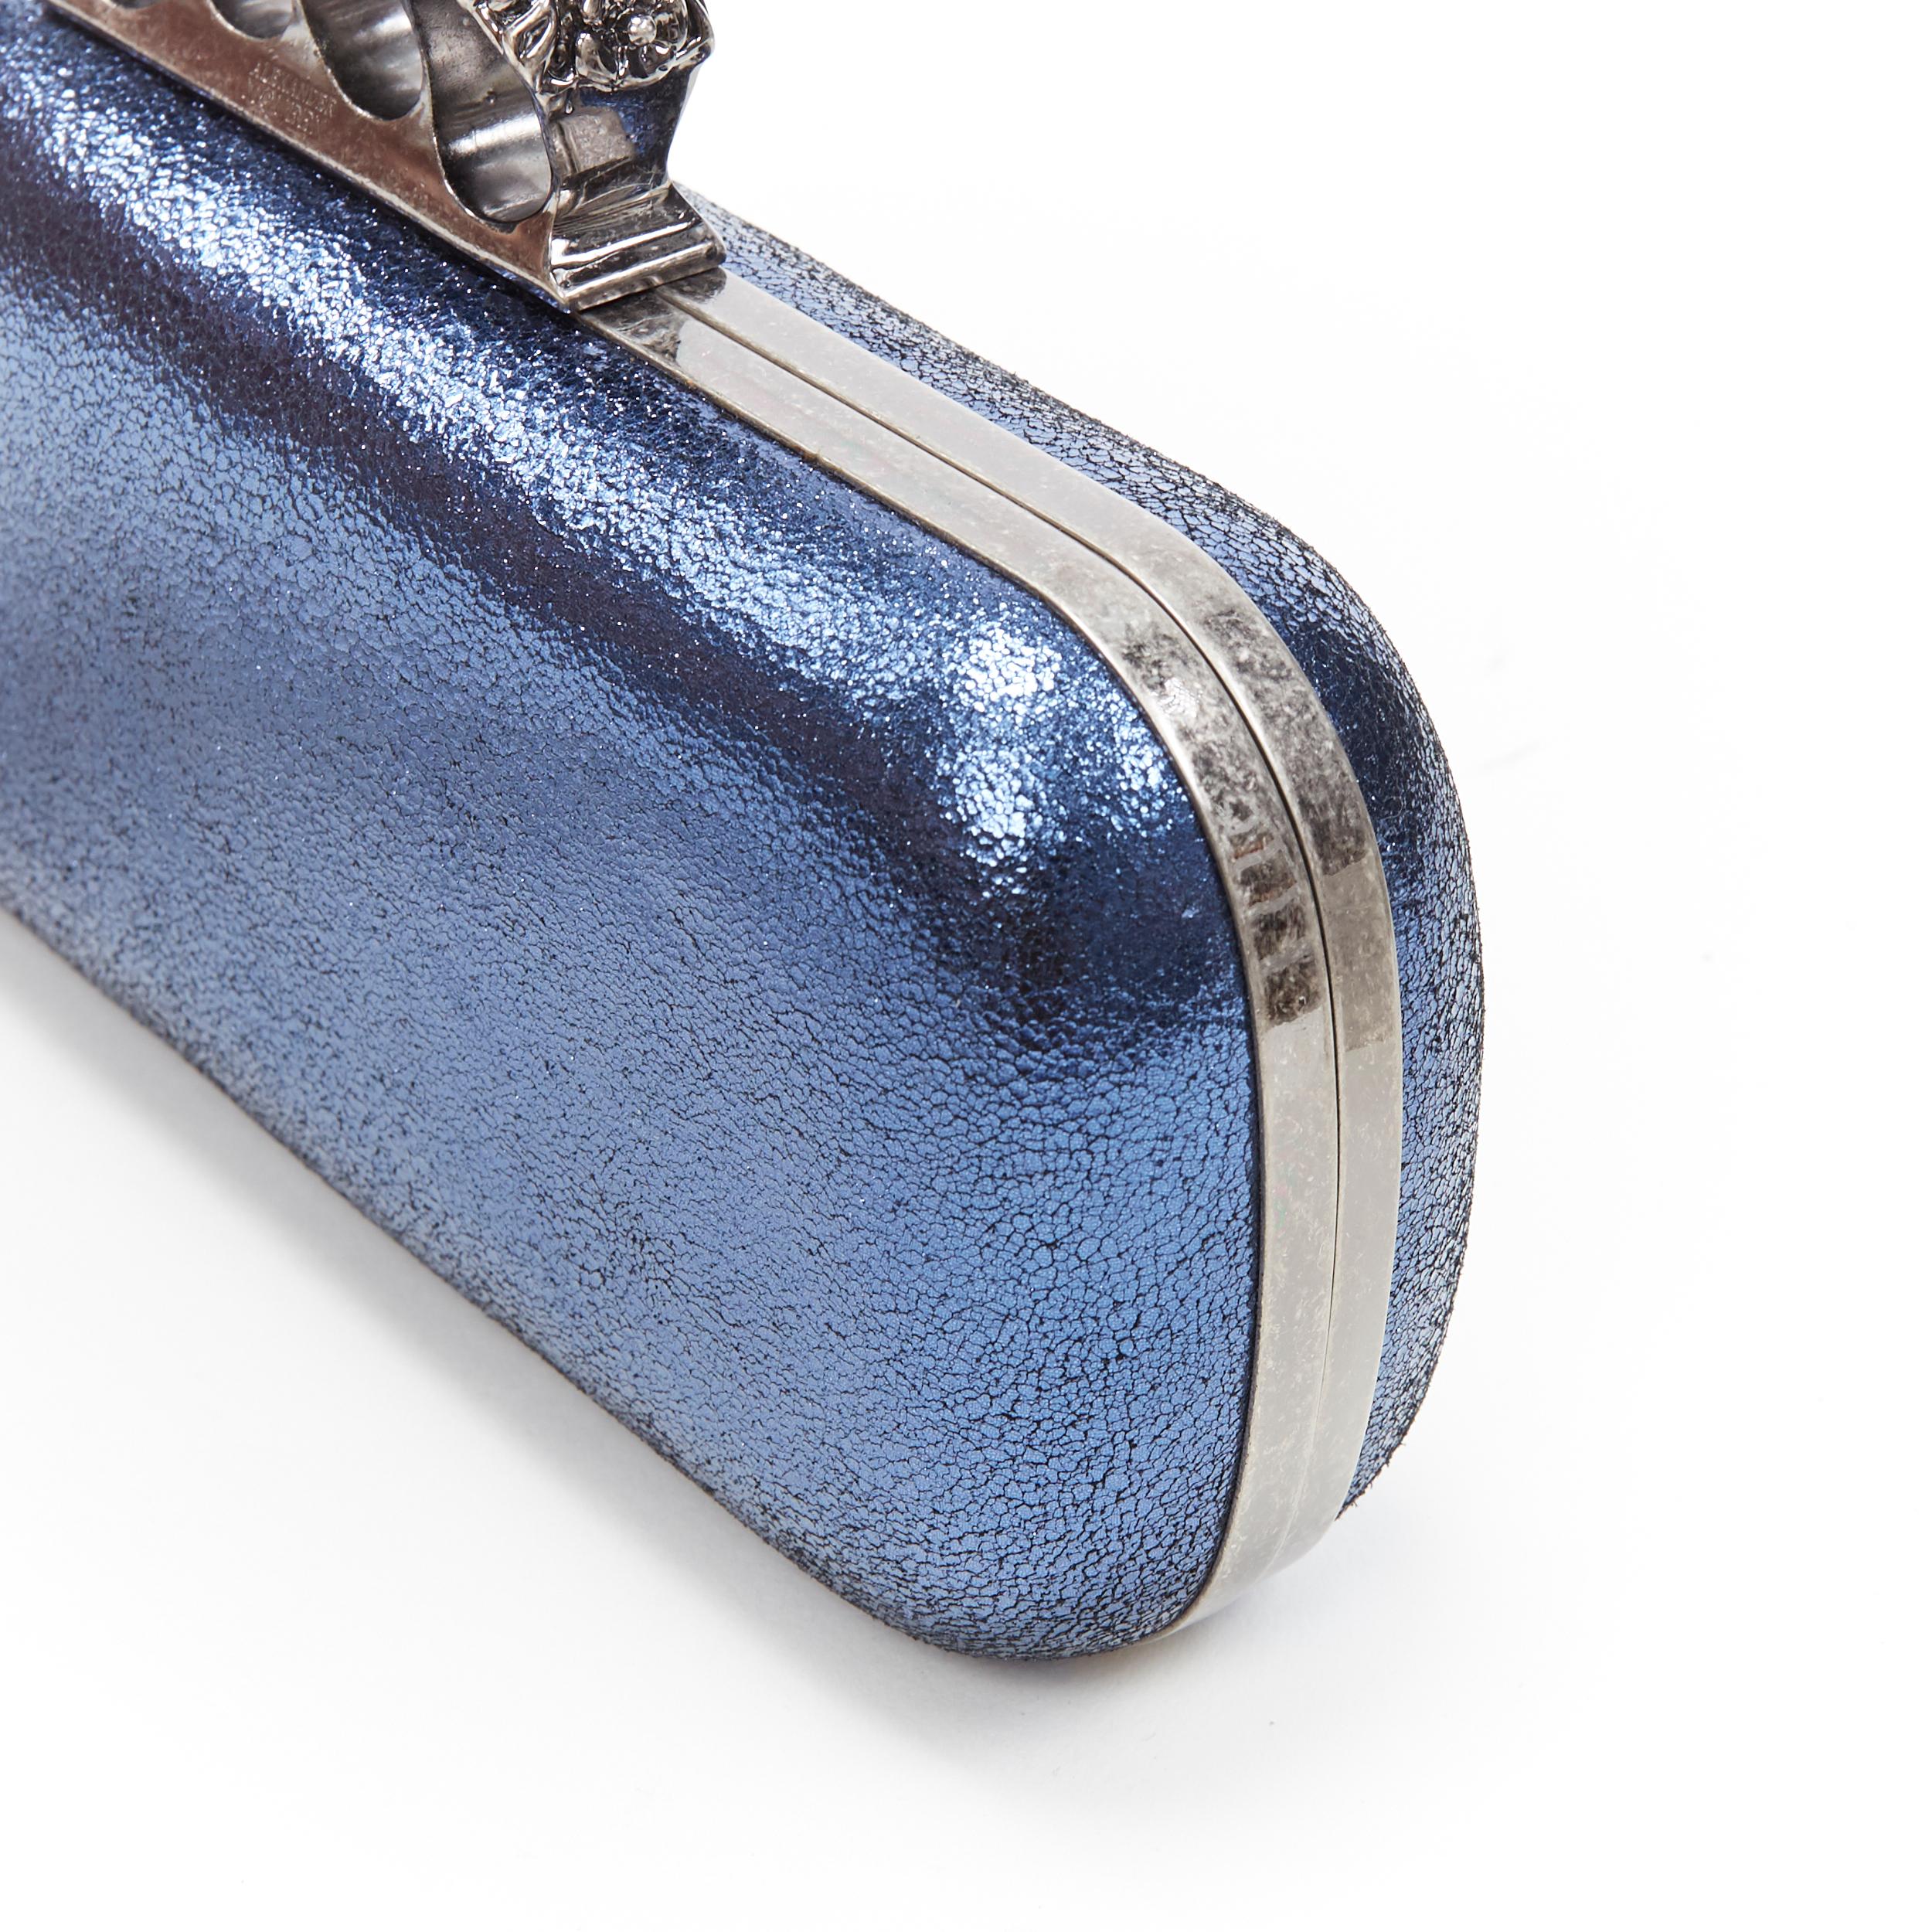 ALEXANDER MCQUEEN metallic blue leather 4-ring skull knuckleduster box clutch 5